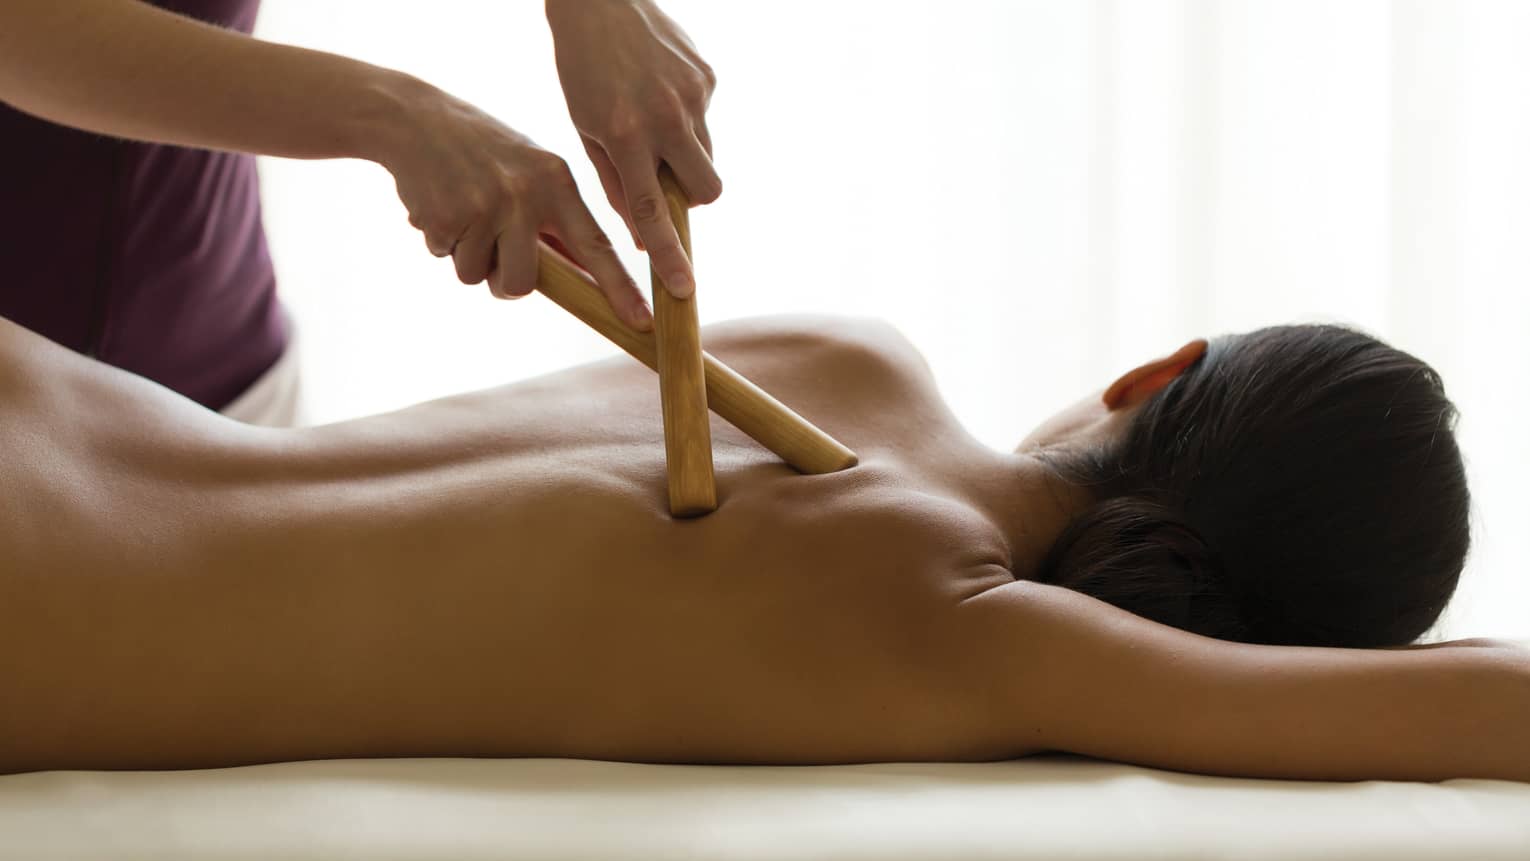 Masseuse presses two birchwood massage sticks into woman's bare back in spa